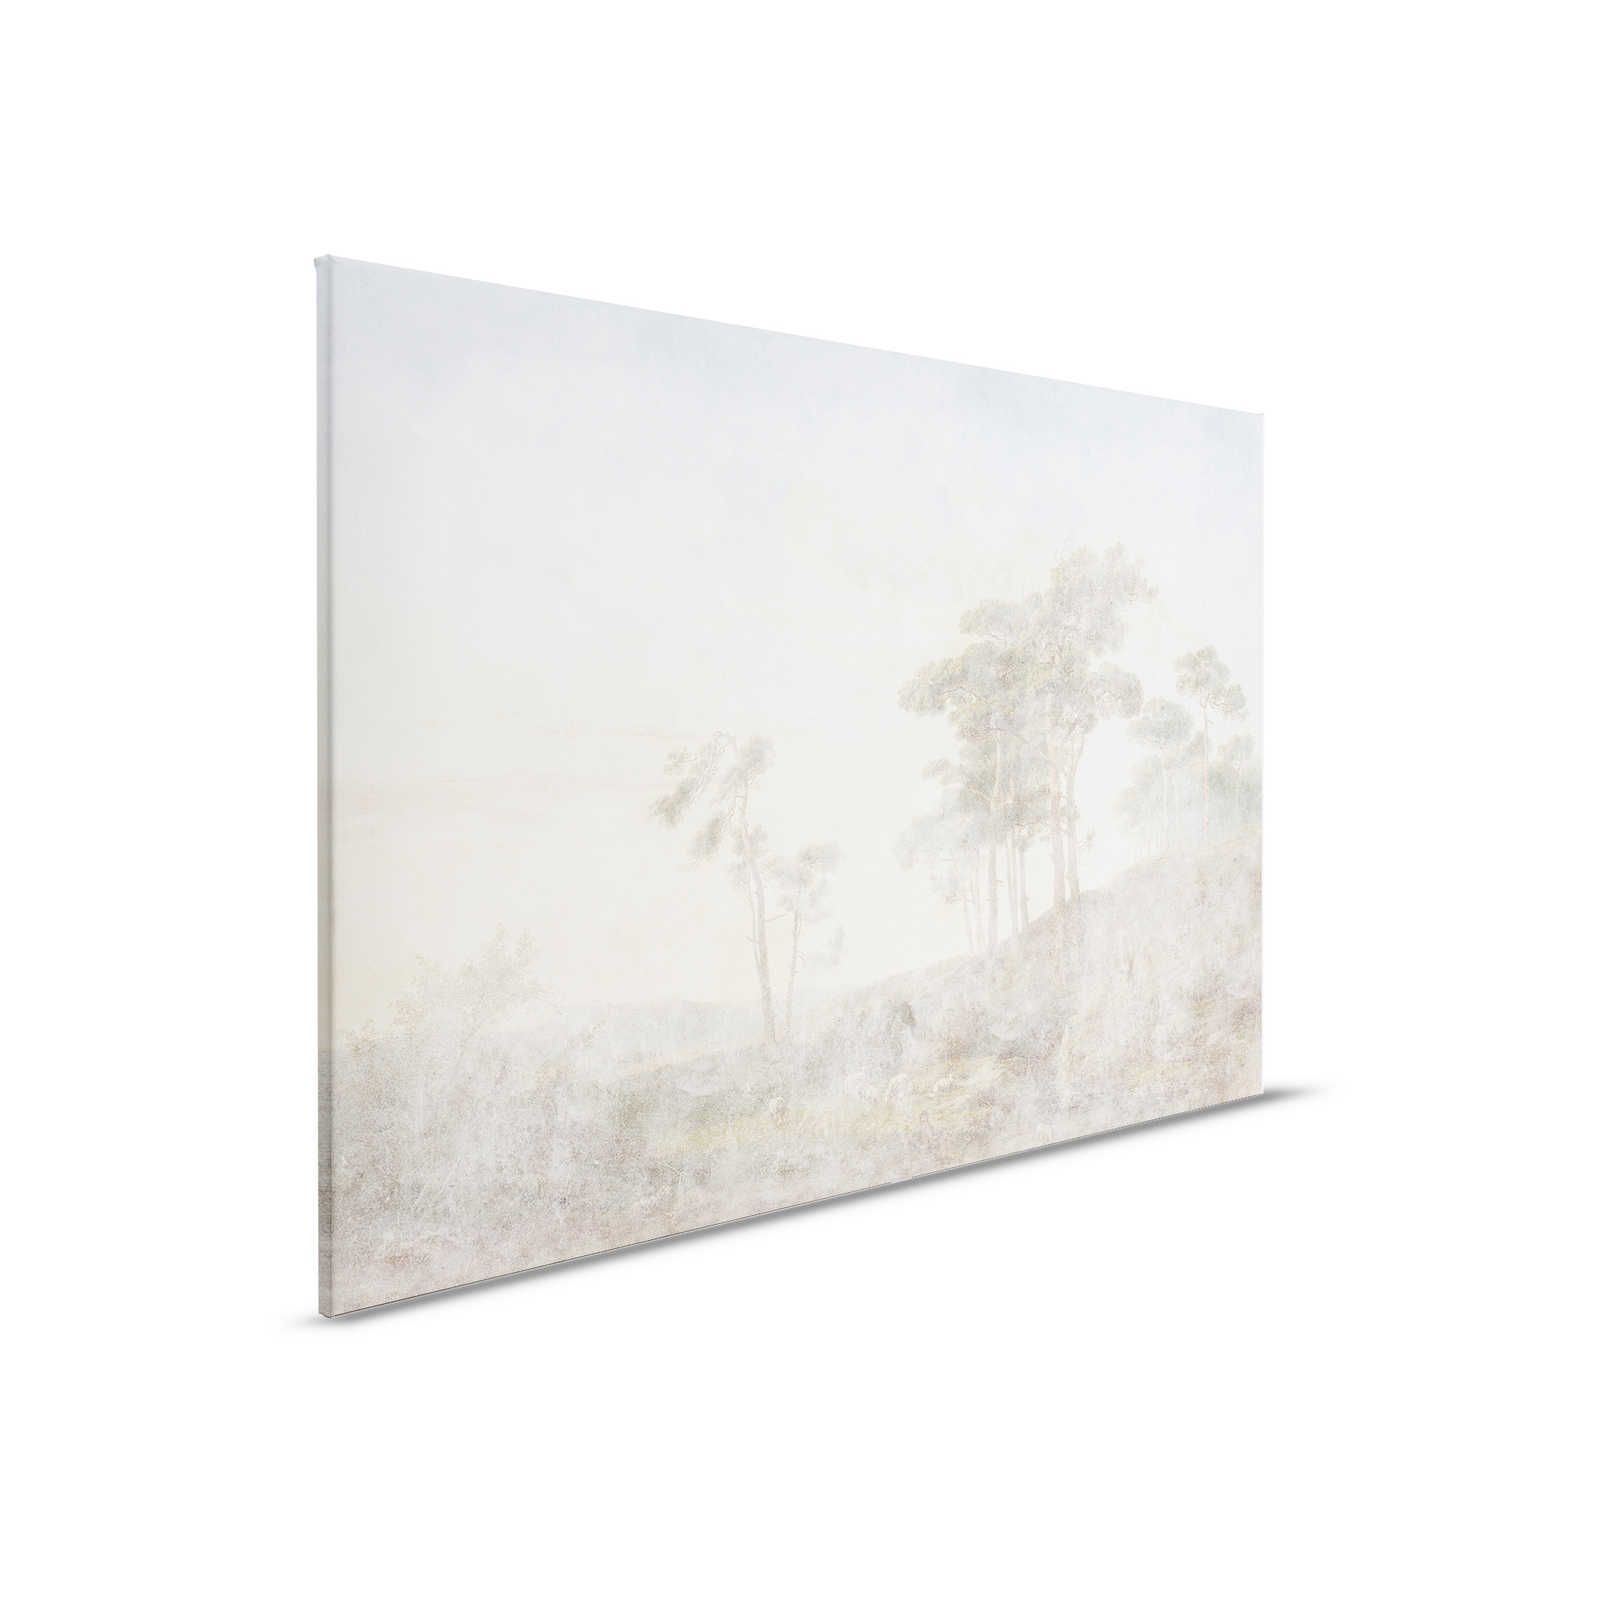 Romantic Grove 1 - Gemälde Leinwandbild verblasster Used Look – 0,90 m x 0,60 m
